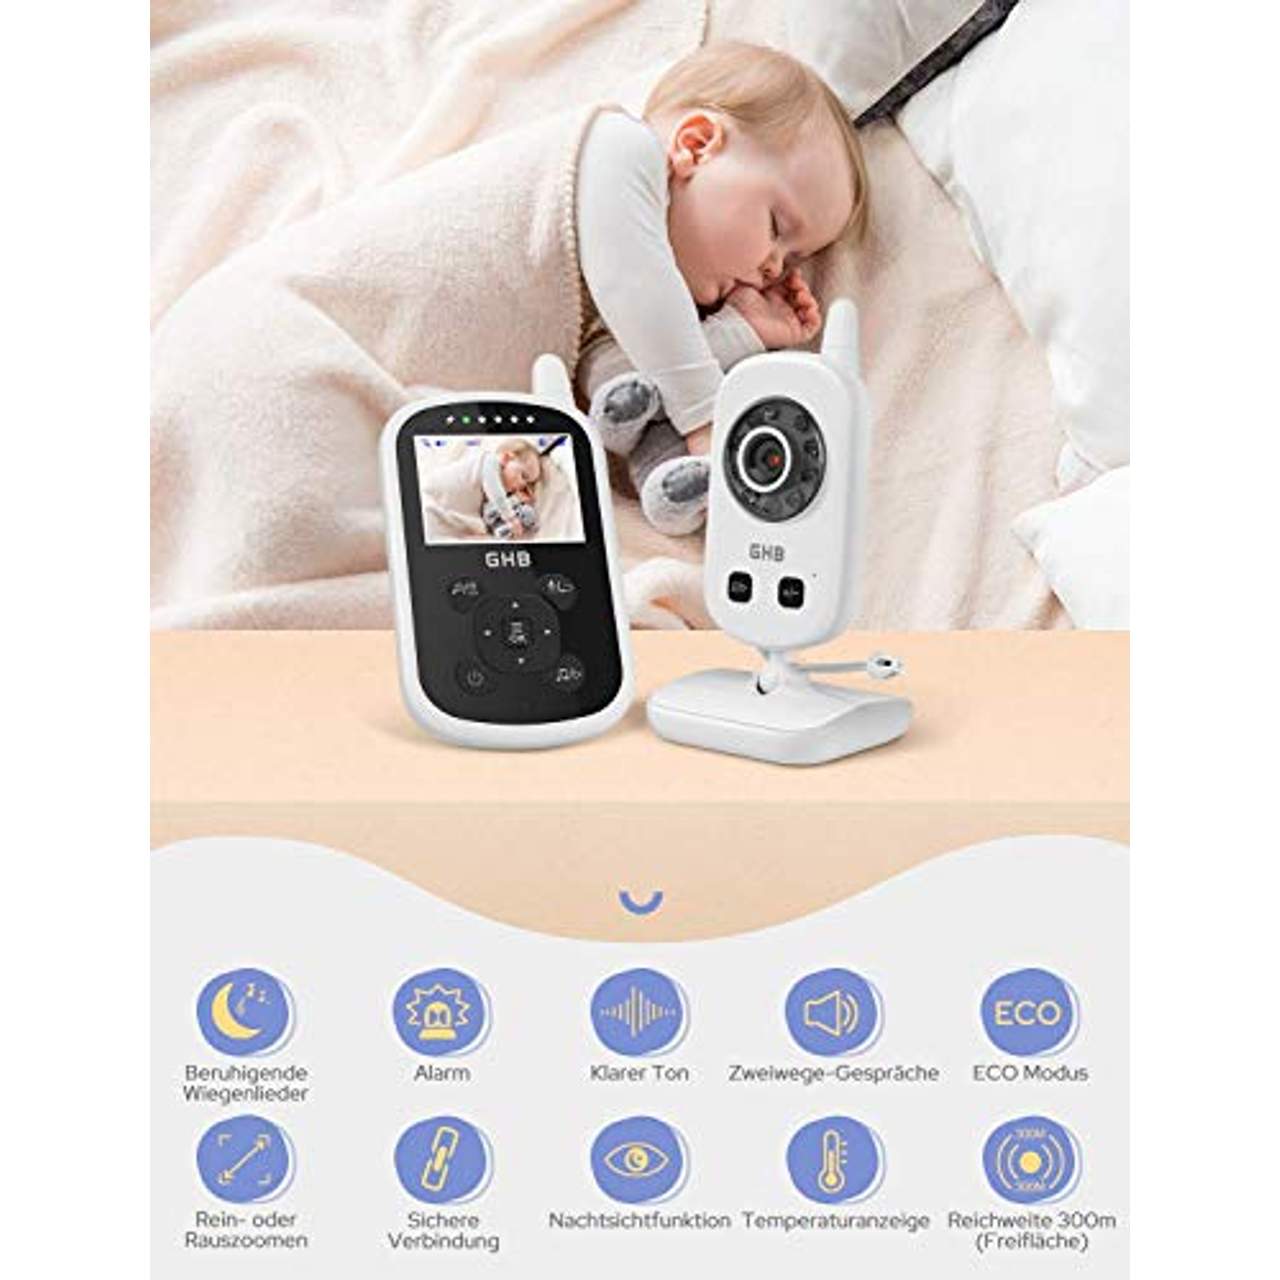 GHB Babyphone mit Kamera Video Baby Monitor  